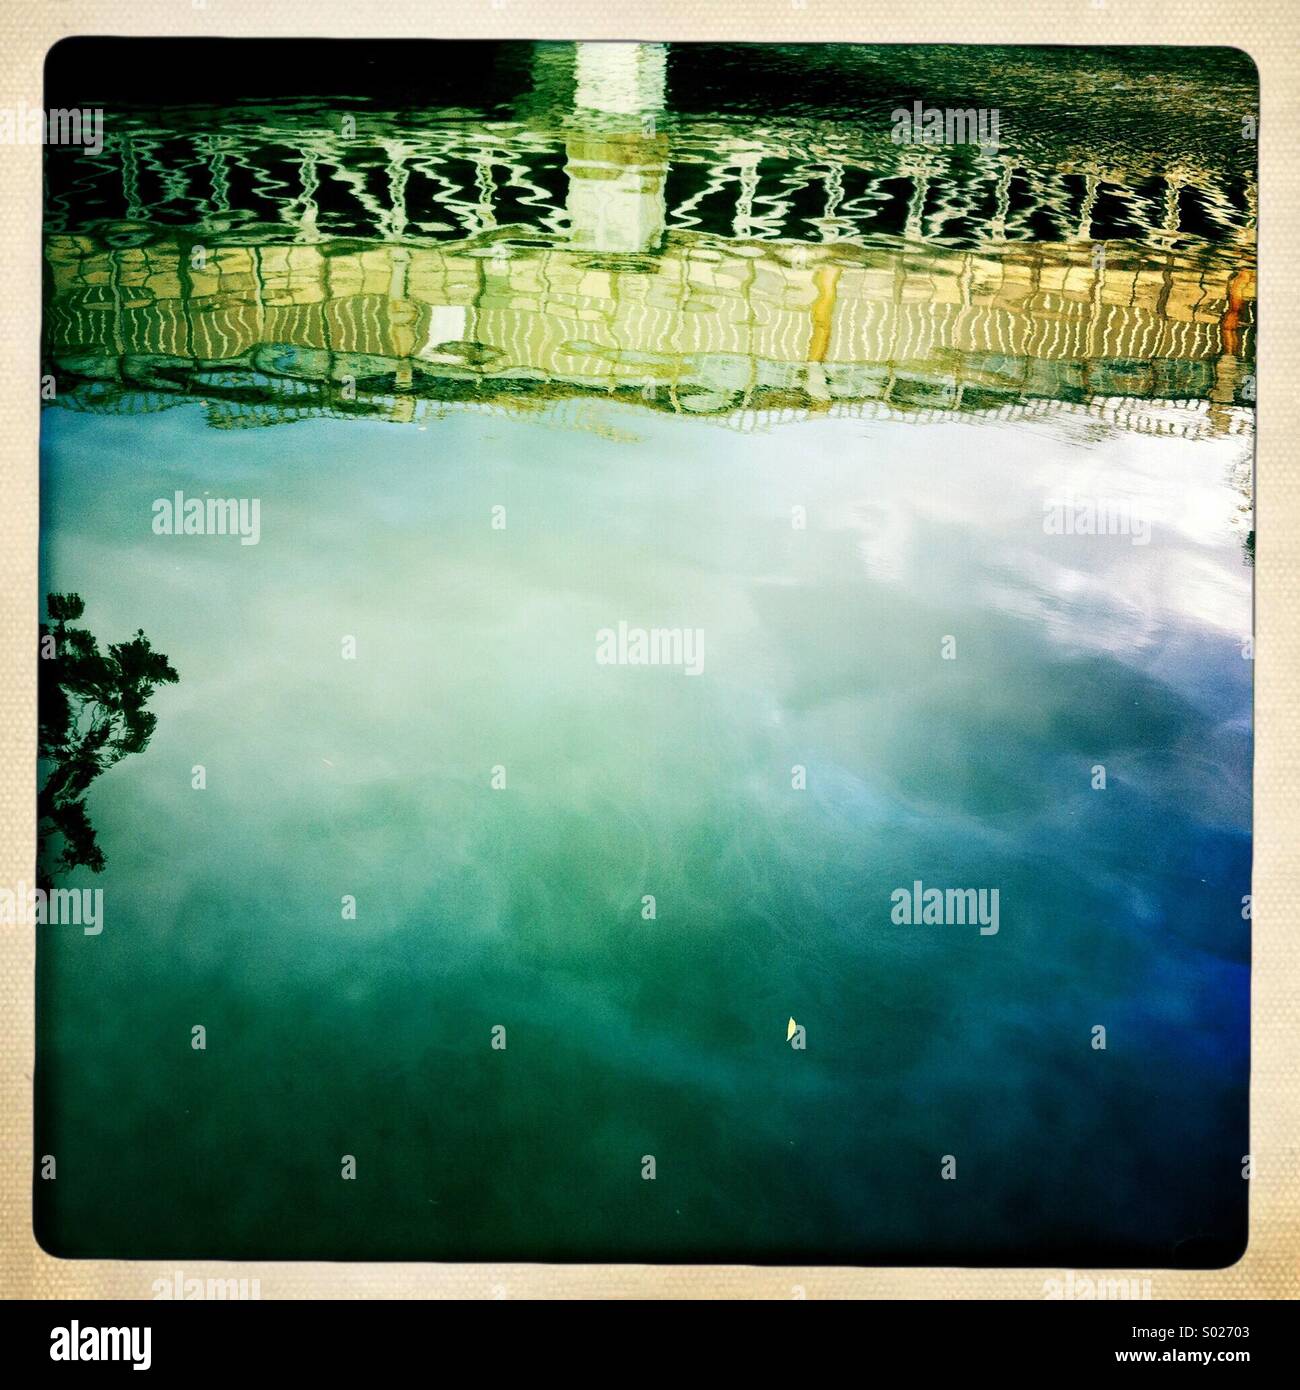 Bridge reflection in water Stock Photo